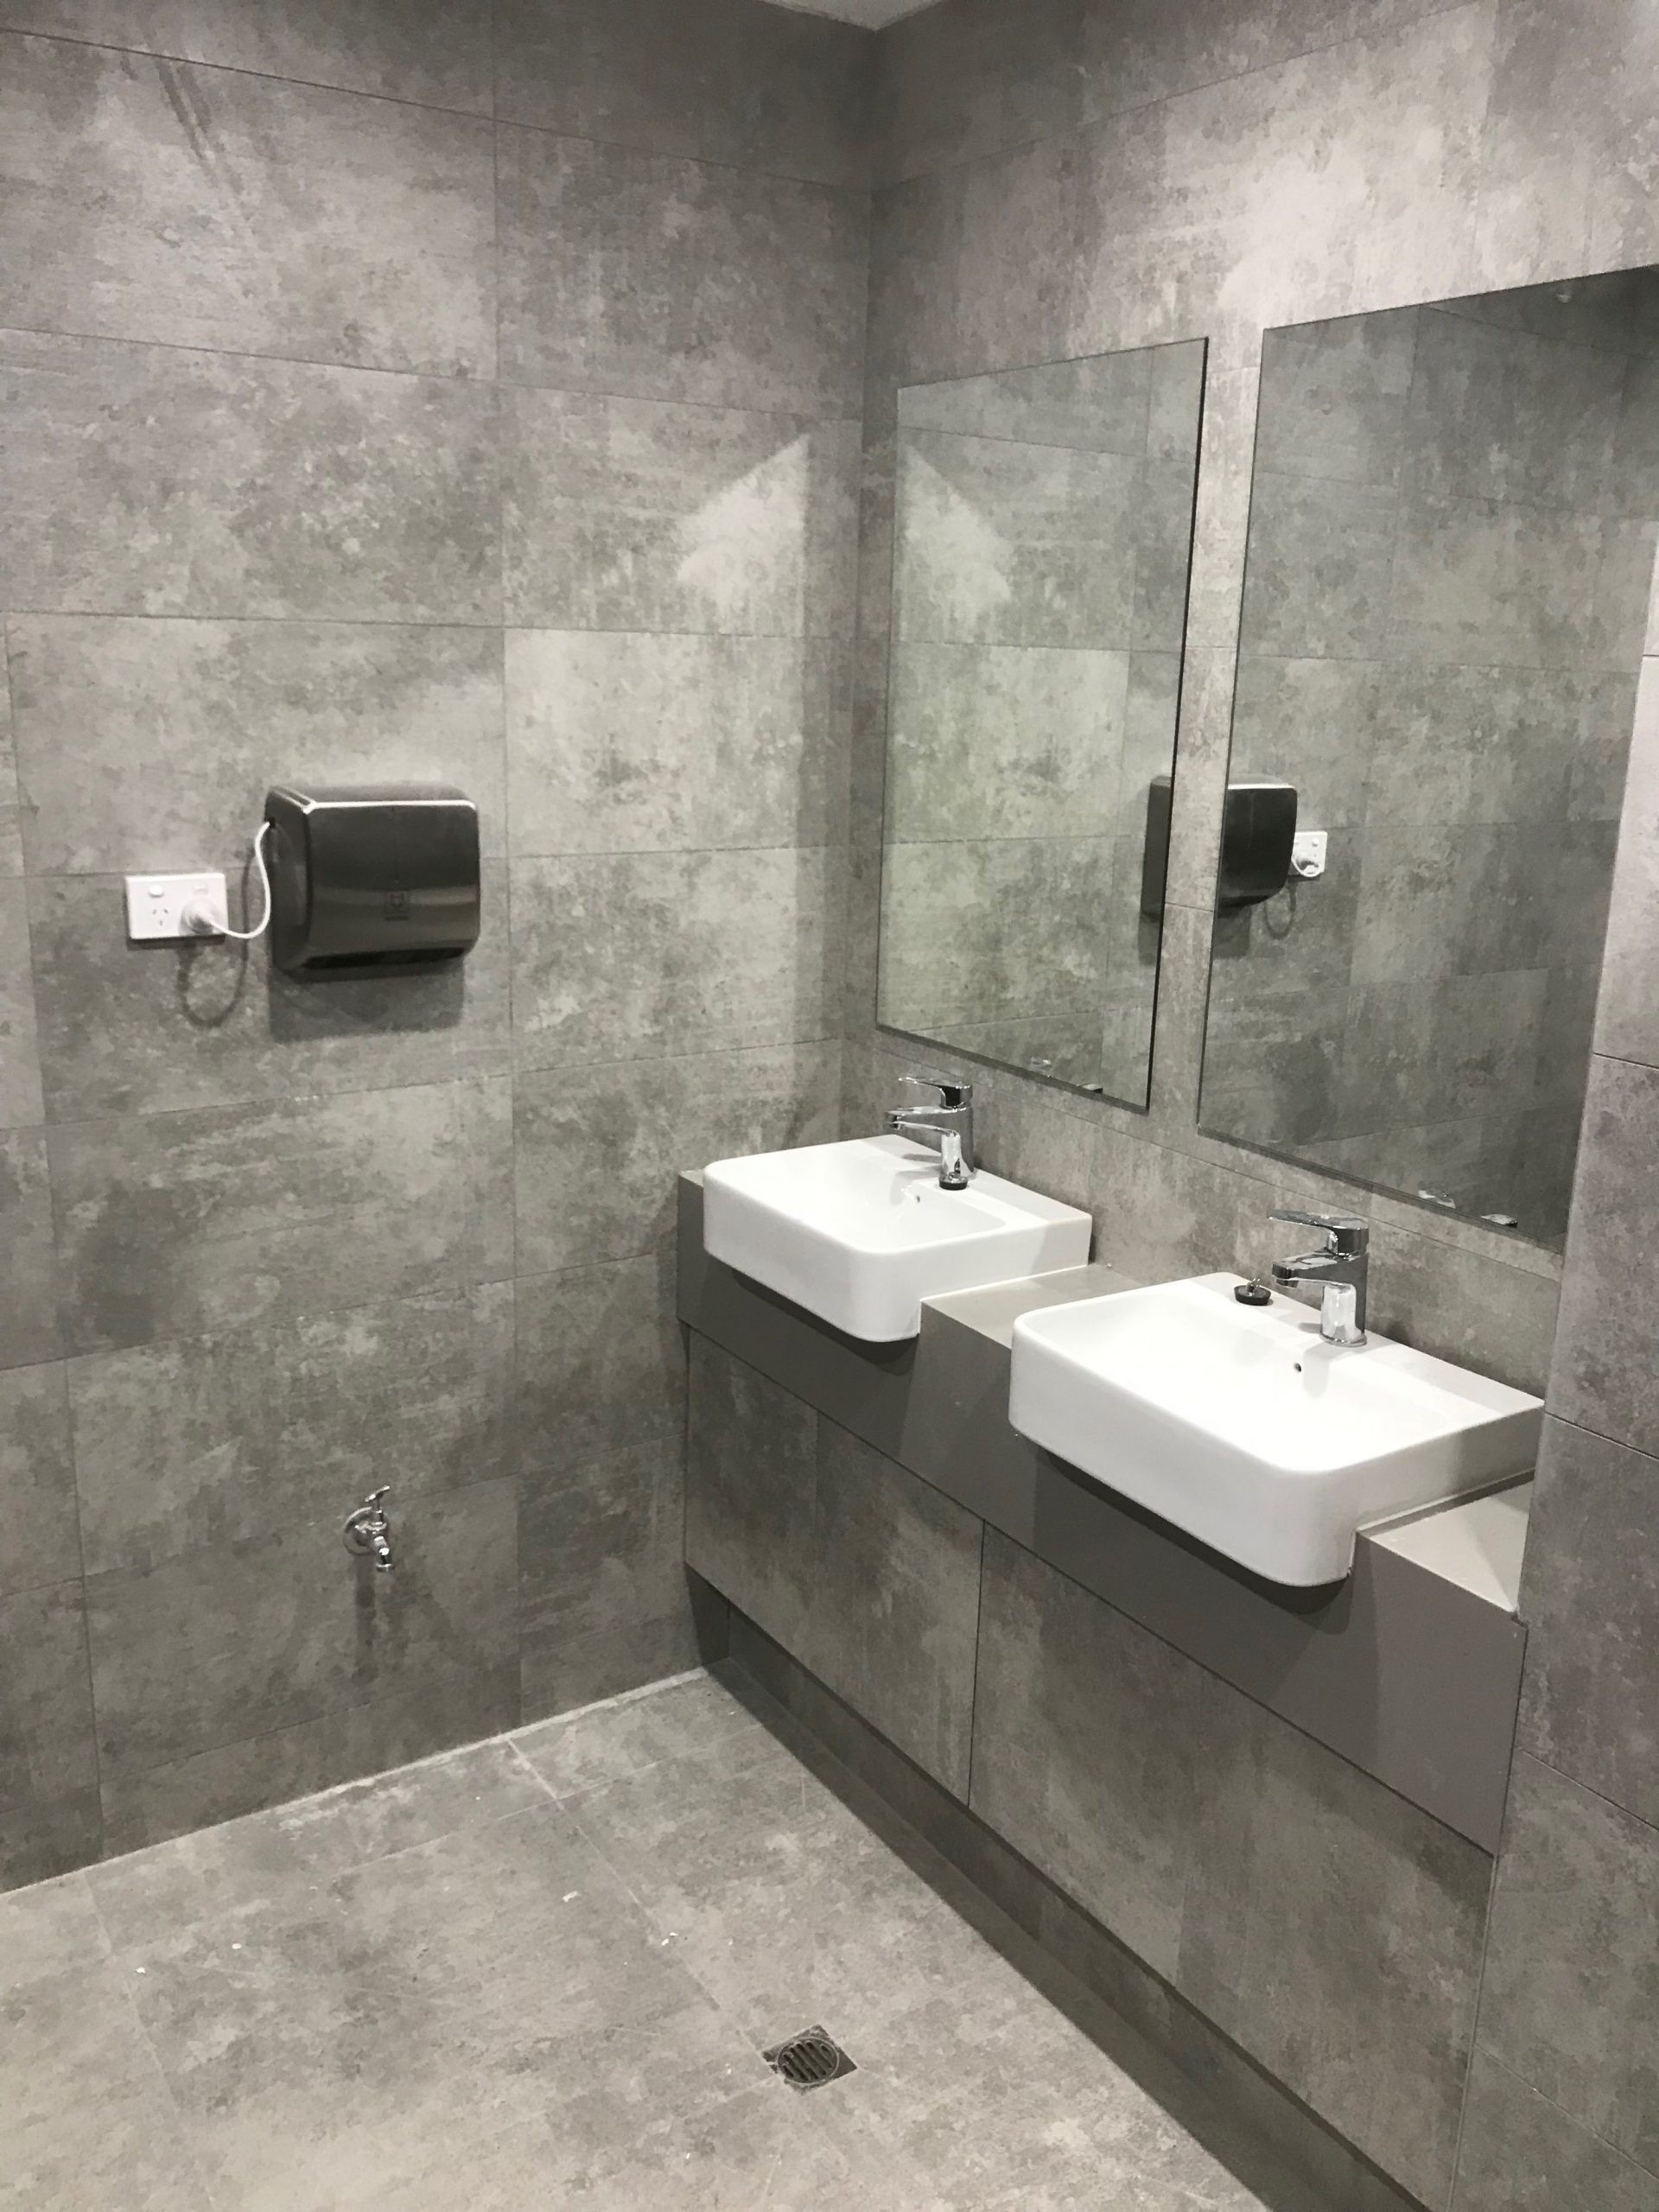 Commercial & Industrial public bathrooms plumbing by Northway Plumbing in Adelaide